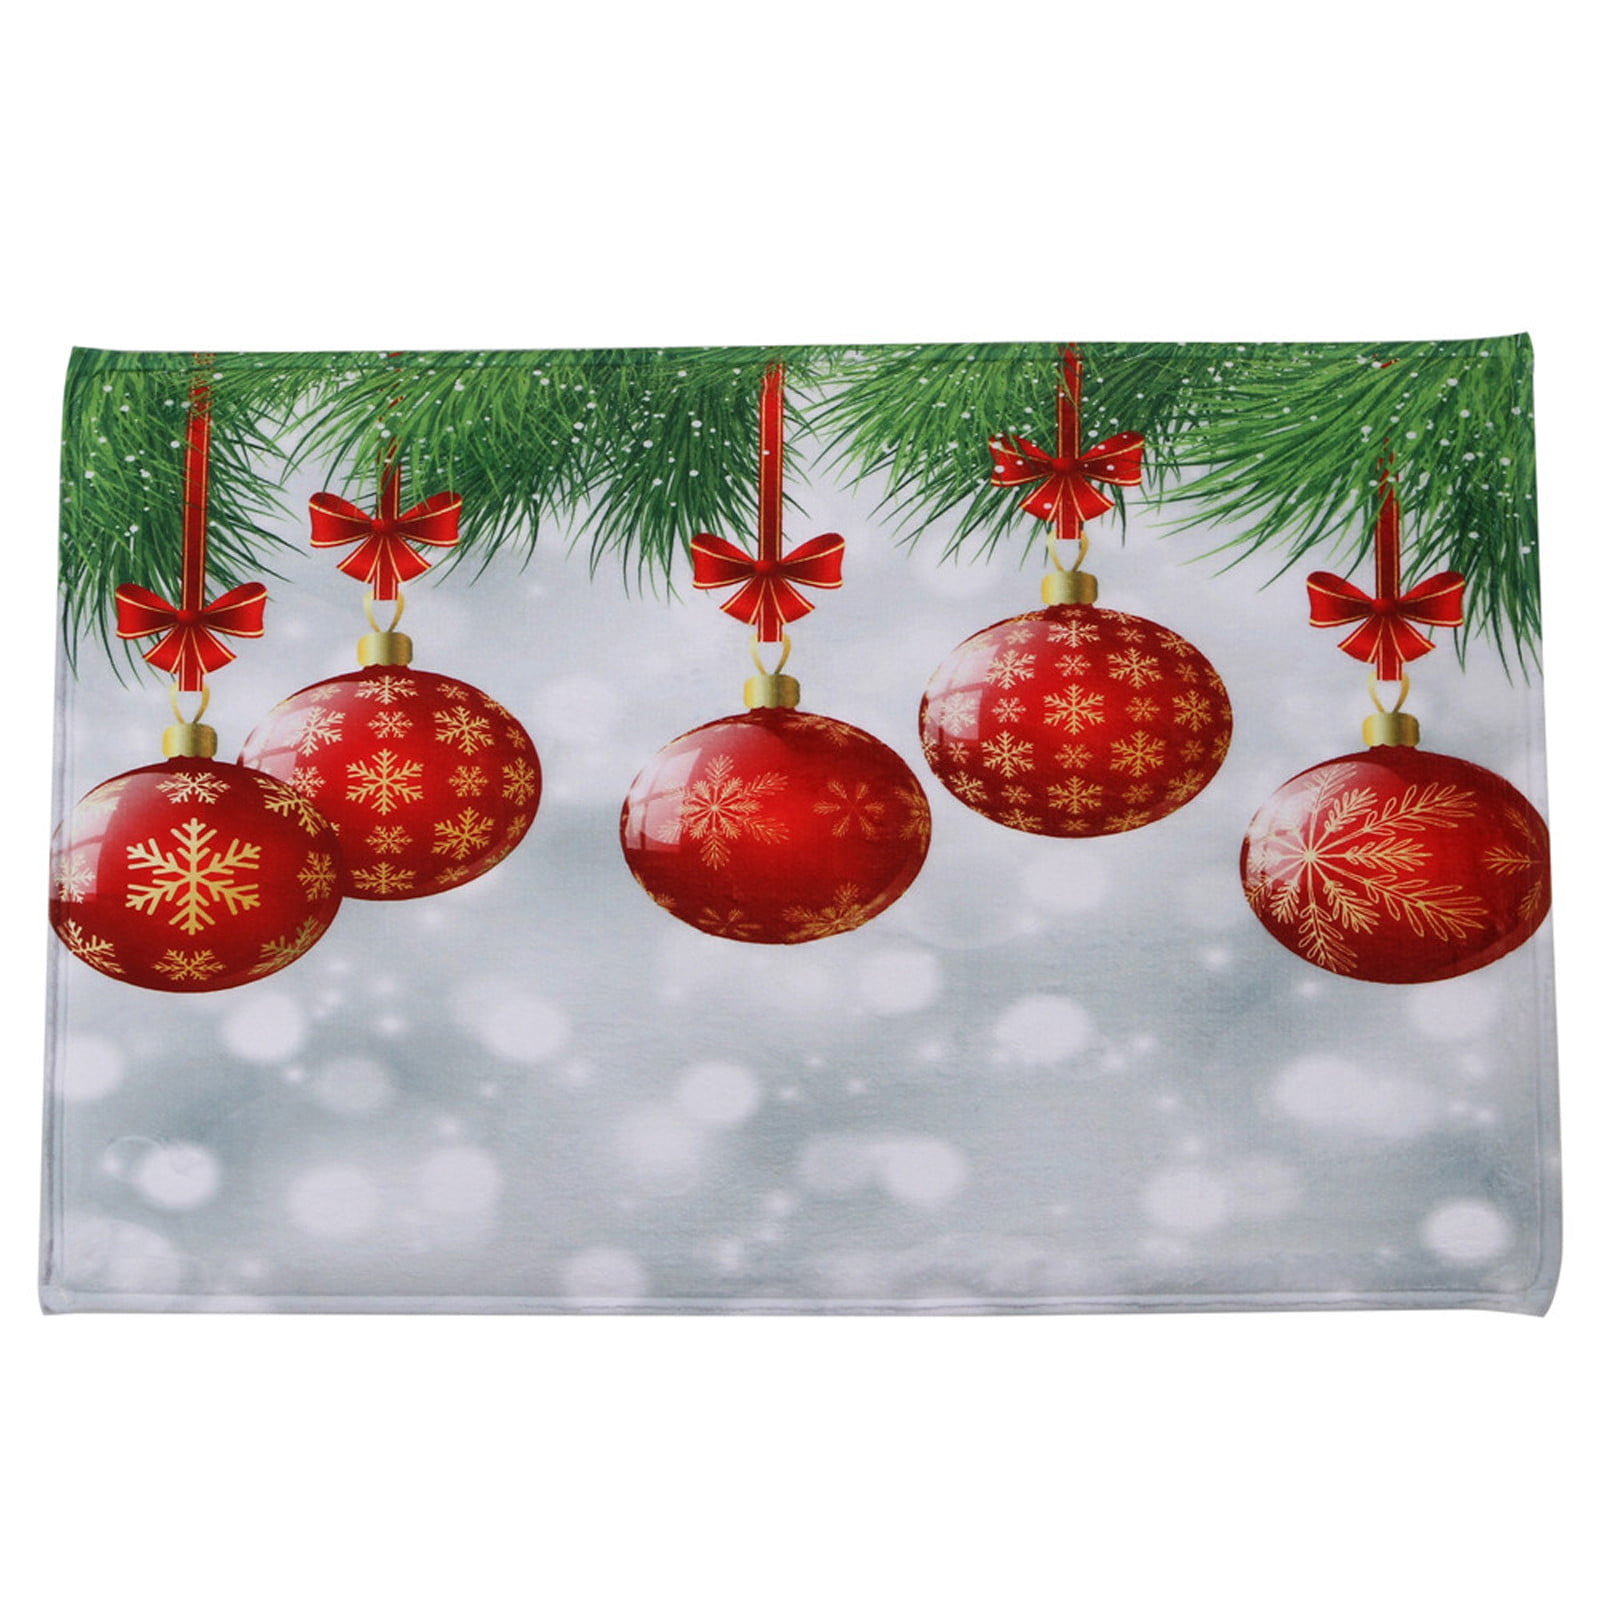 Nutcracker Cushion Cover Linen White 40cm Christmas Xmas Home Decor Gift